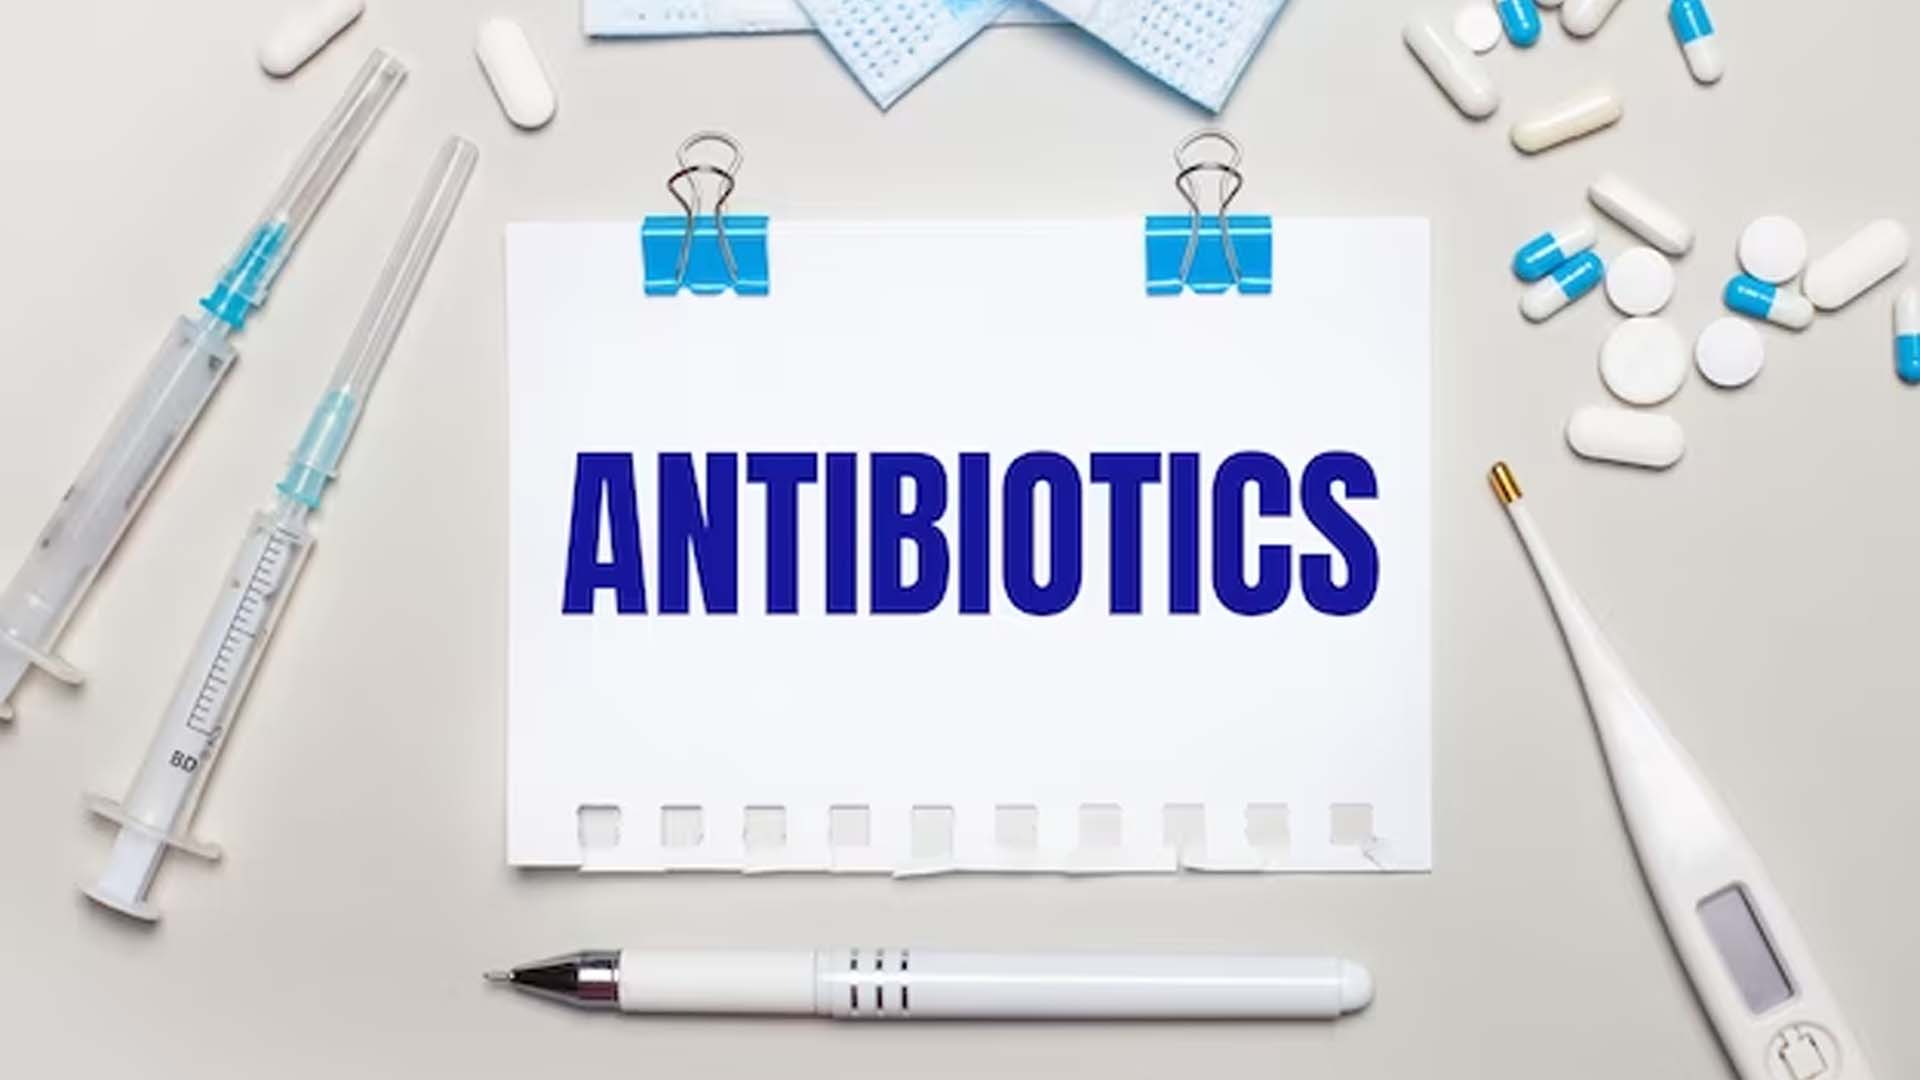 Can Antibiotics Cause Constipation?